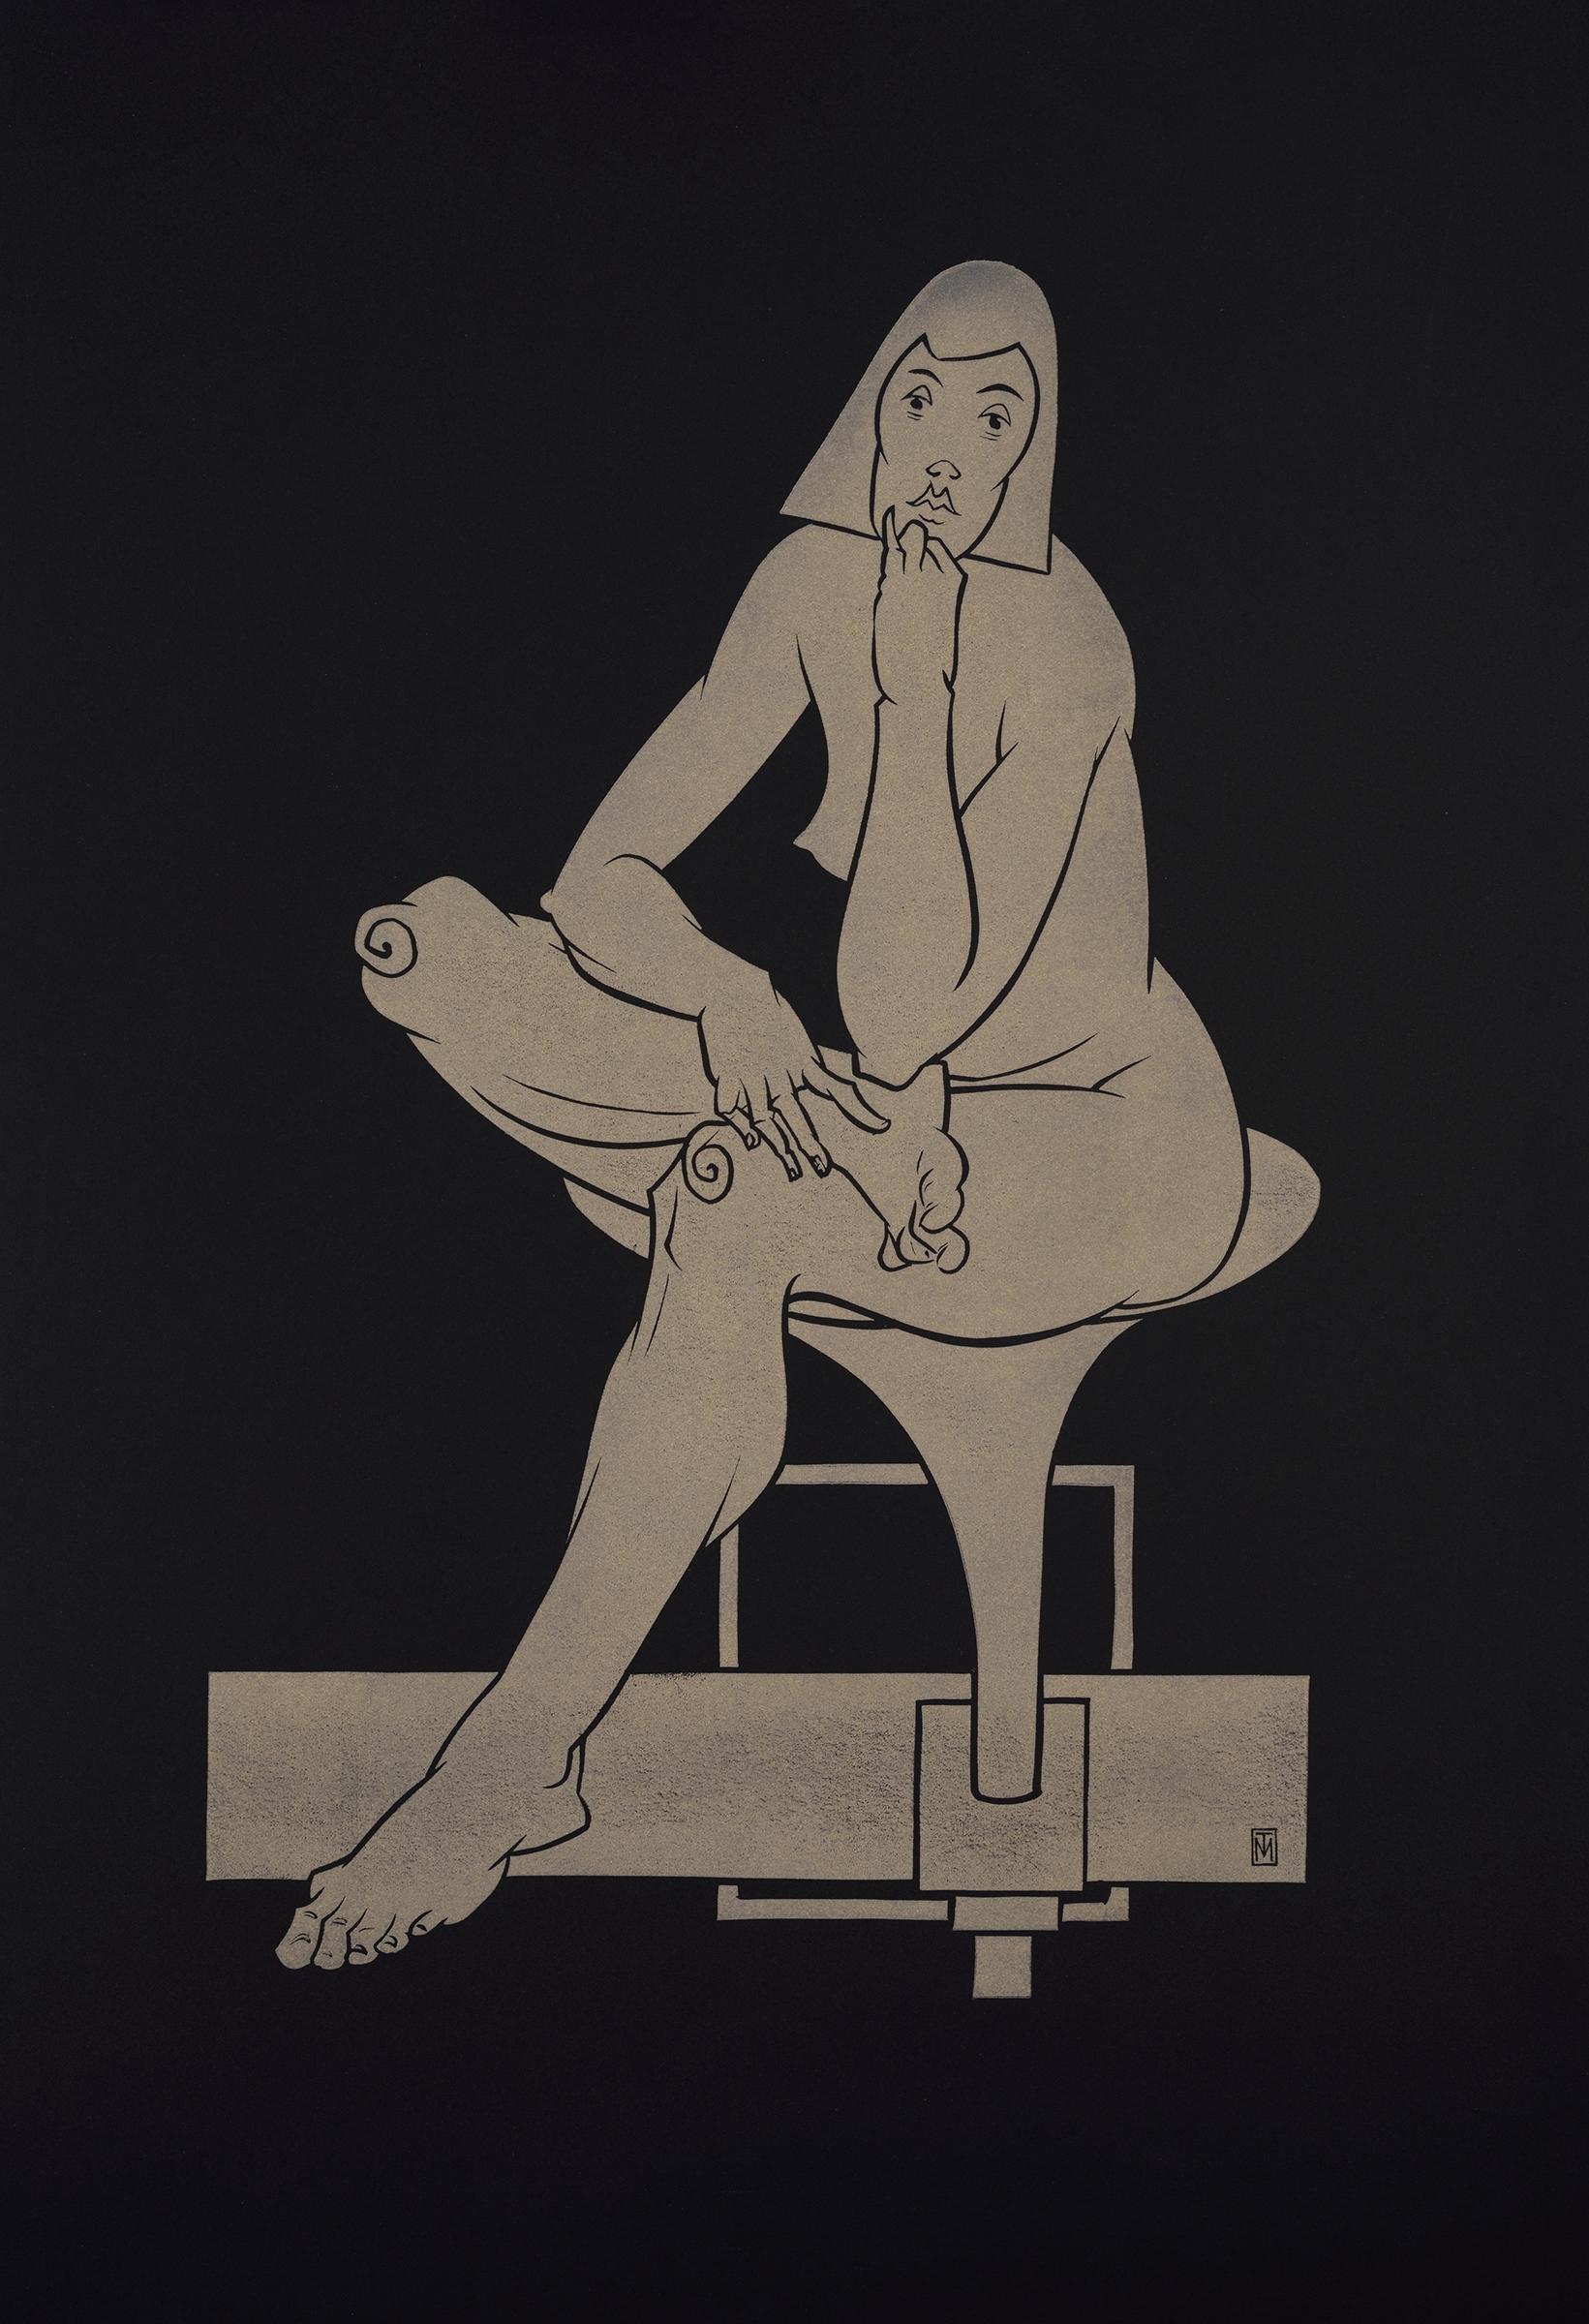 Martyn Tverdun Nude - "Sitting on the Modern Chair" - gold block print on black paper, nude female